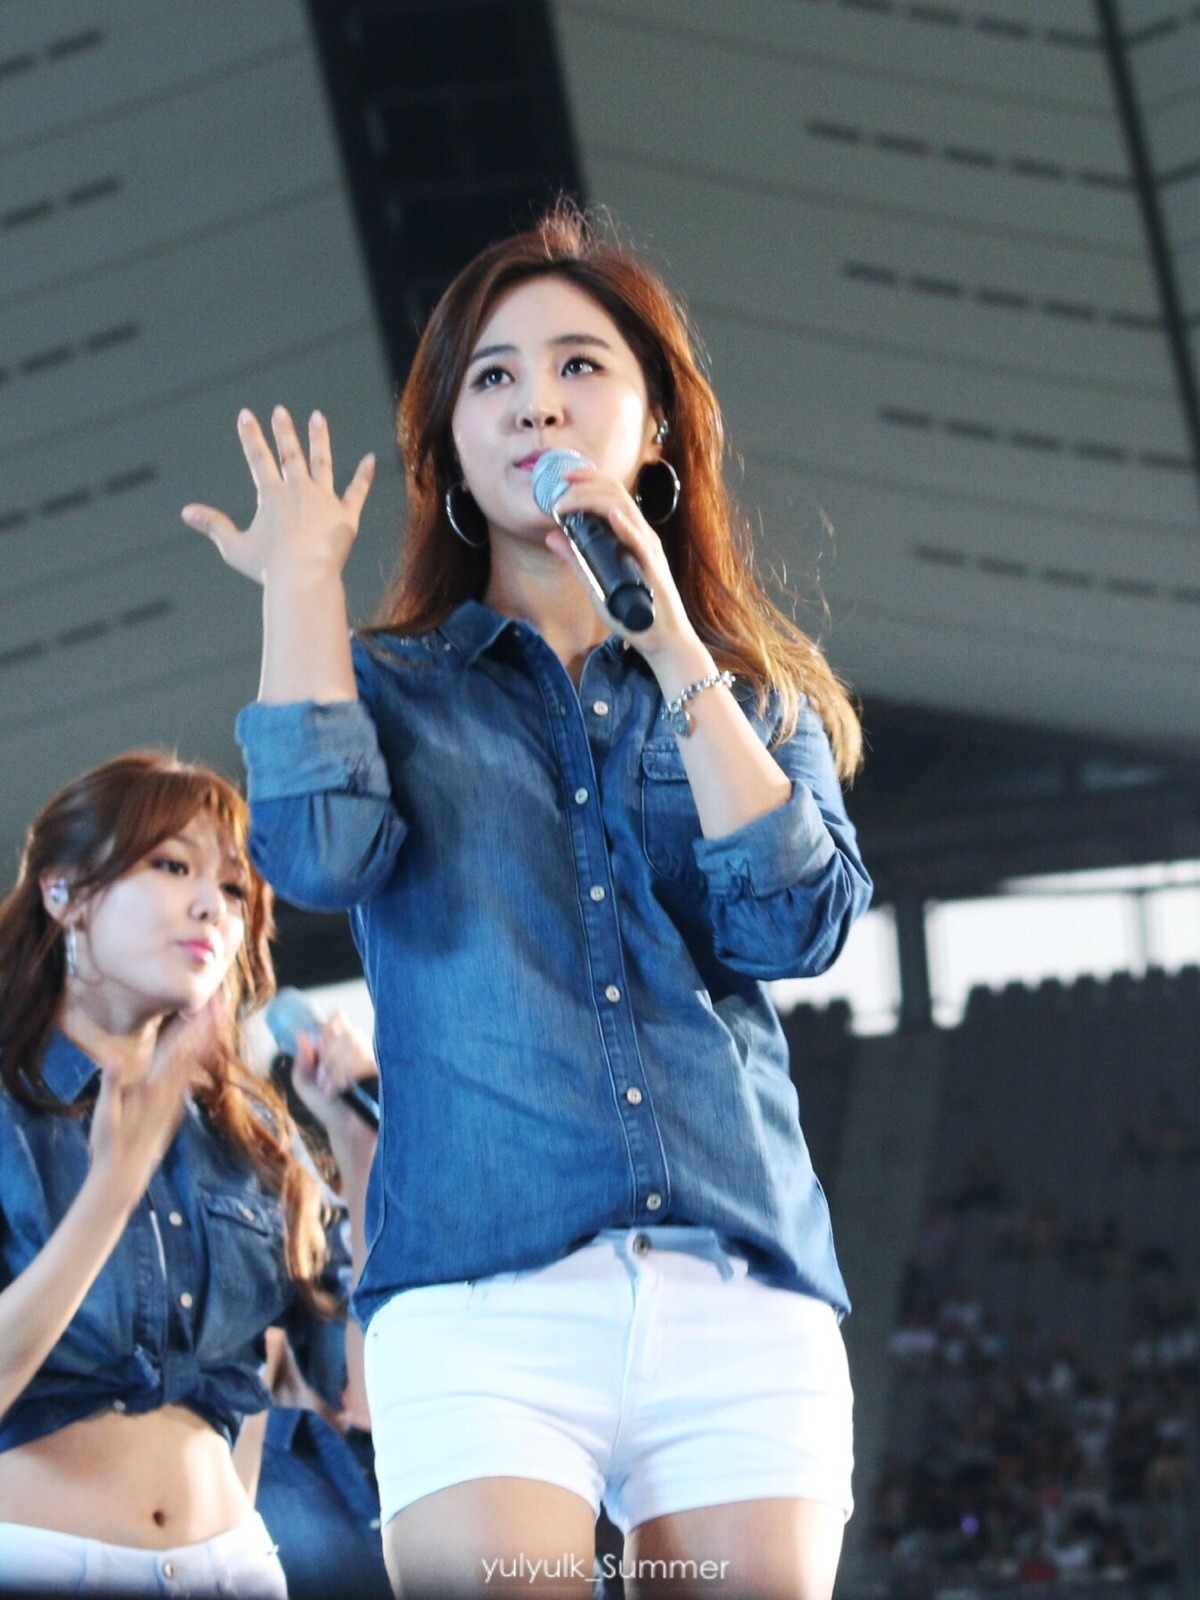 [PIC][15-08-2014]SNSD tham dự "SMTOWN LIVE WORLD TOUR IV in SEOUL" vào chiều nay - Page 4 Tumblr_nae3ogpOwa1sewbc1o1_1280